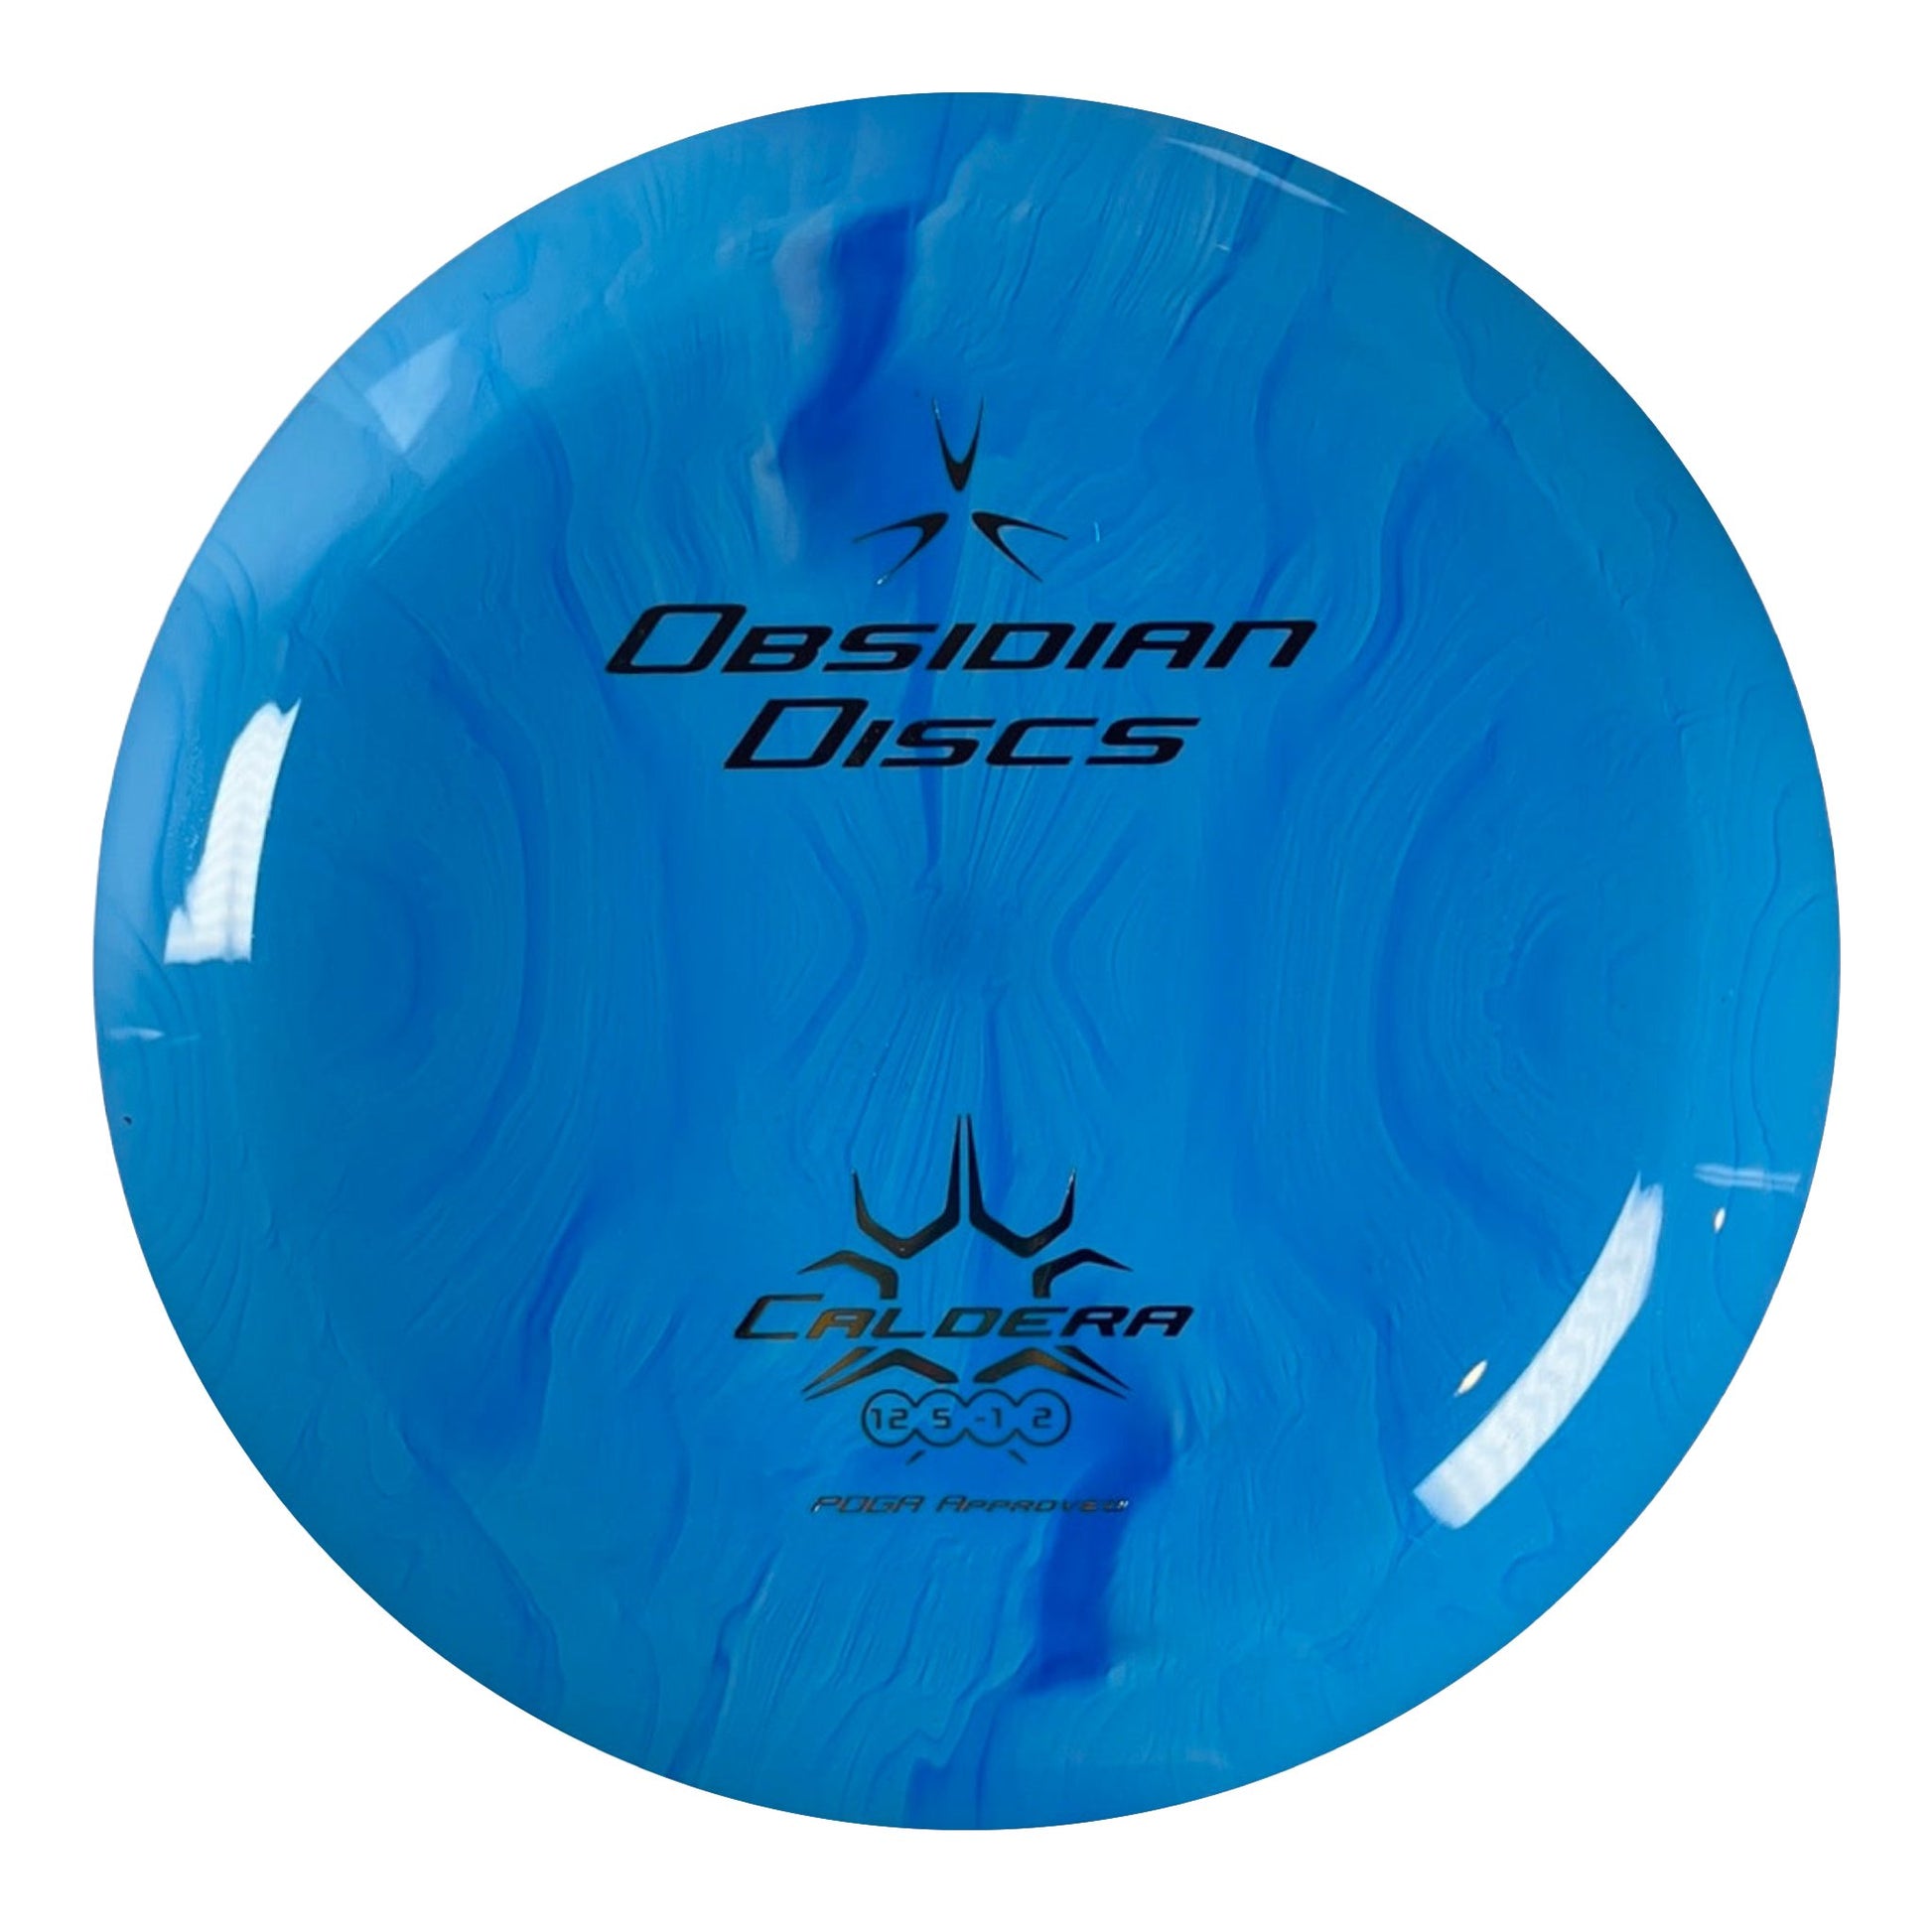 Obsidian Discs Caldera | H9 | Blue/Gold 175g Disc Golf